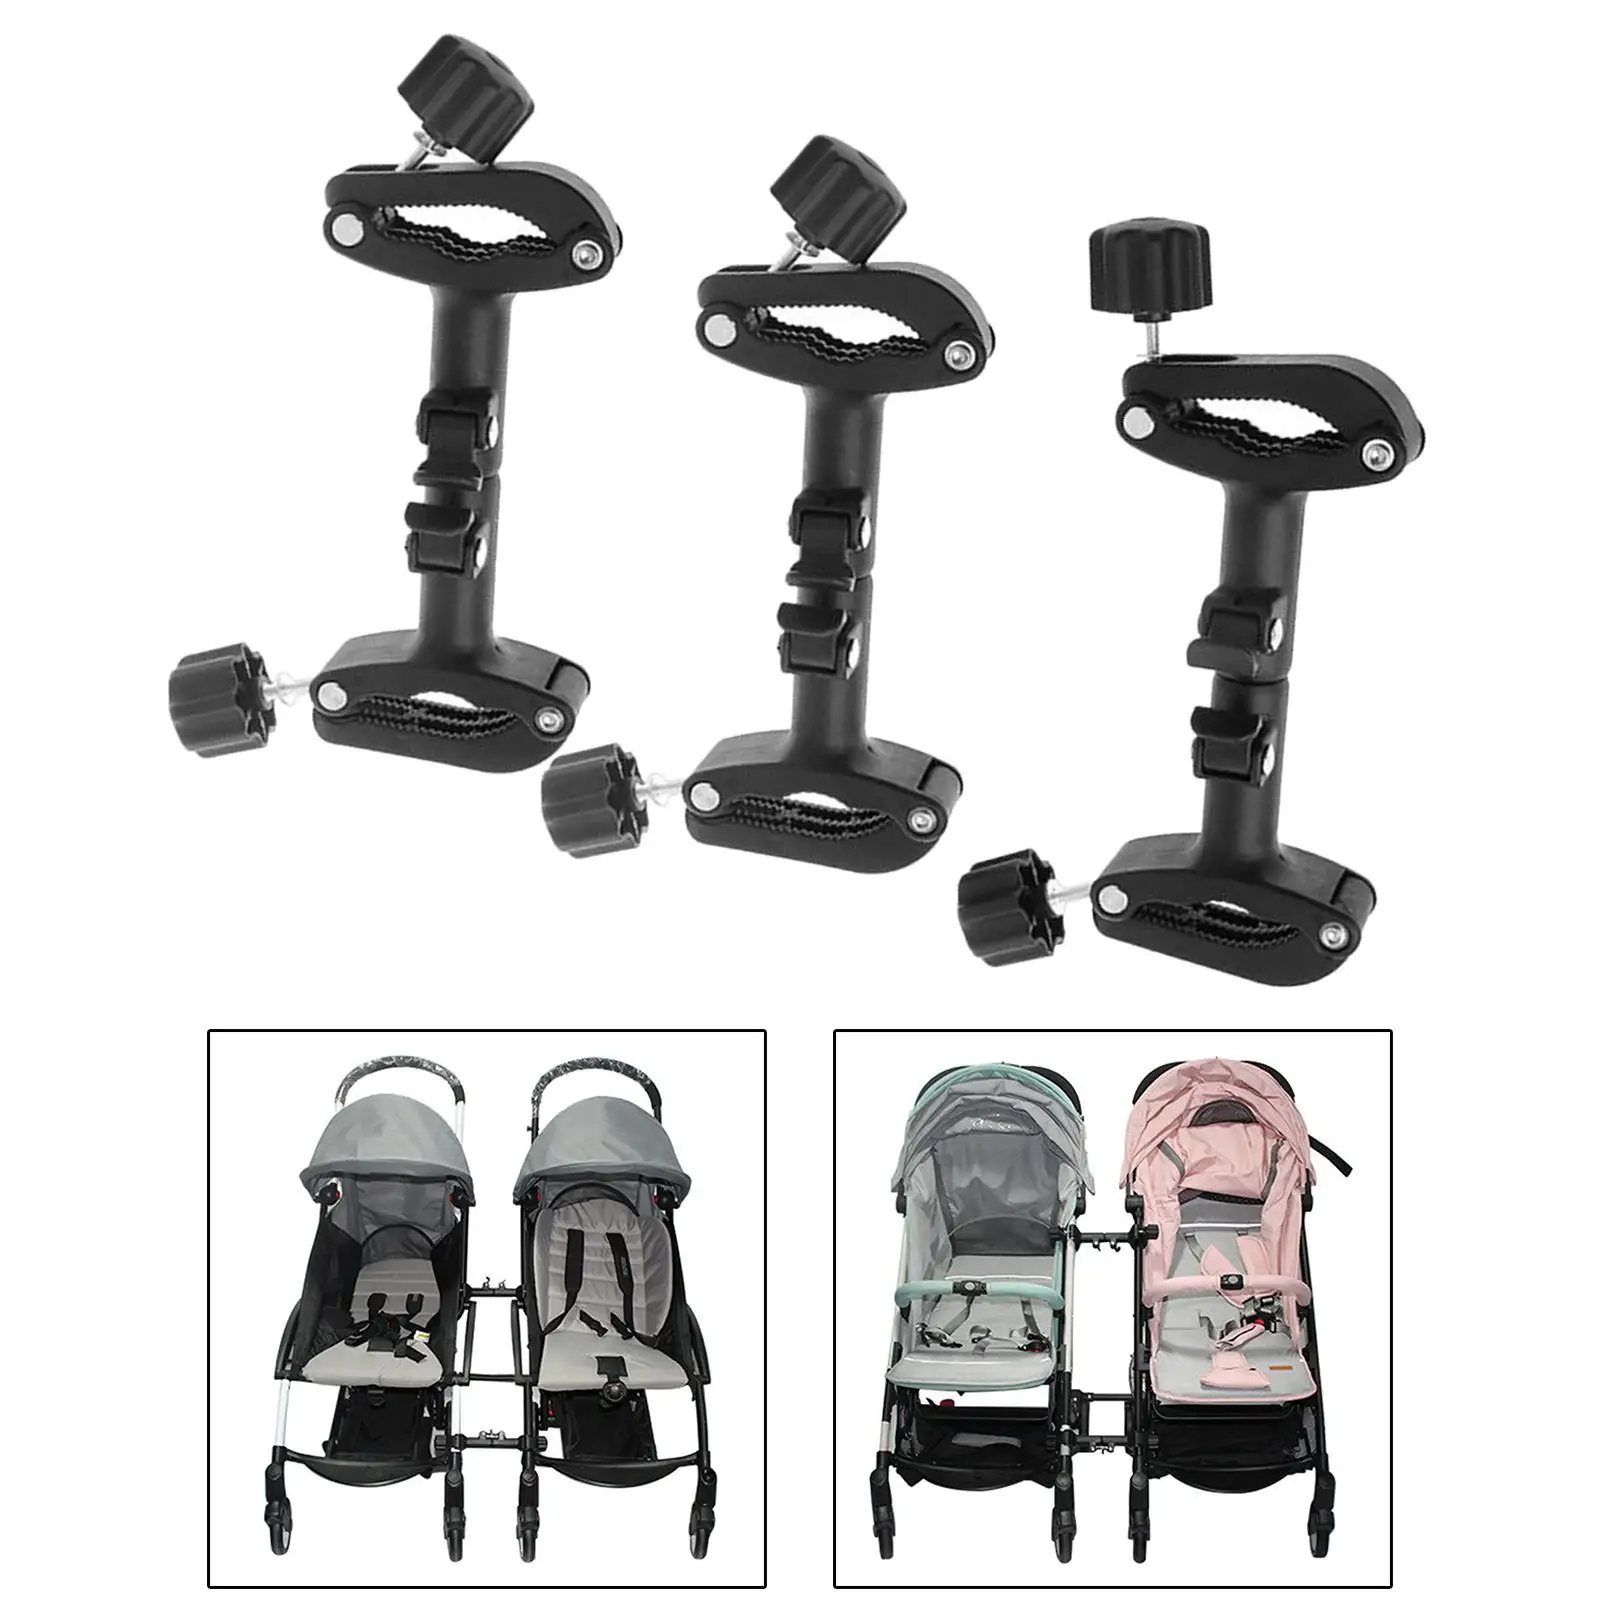 3x Baby Stroller Accessories Pushchairs Pram Part for Infant Child Kids